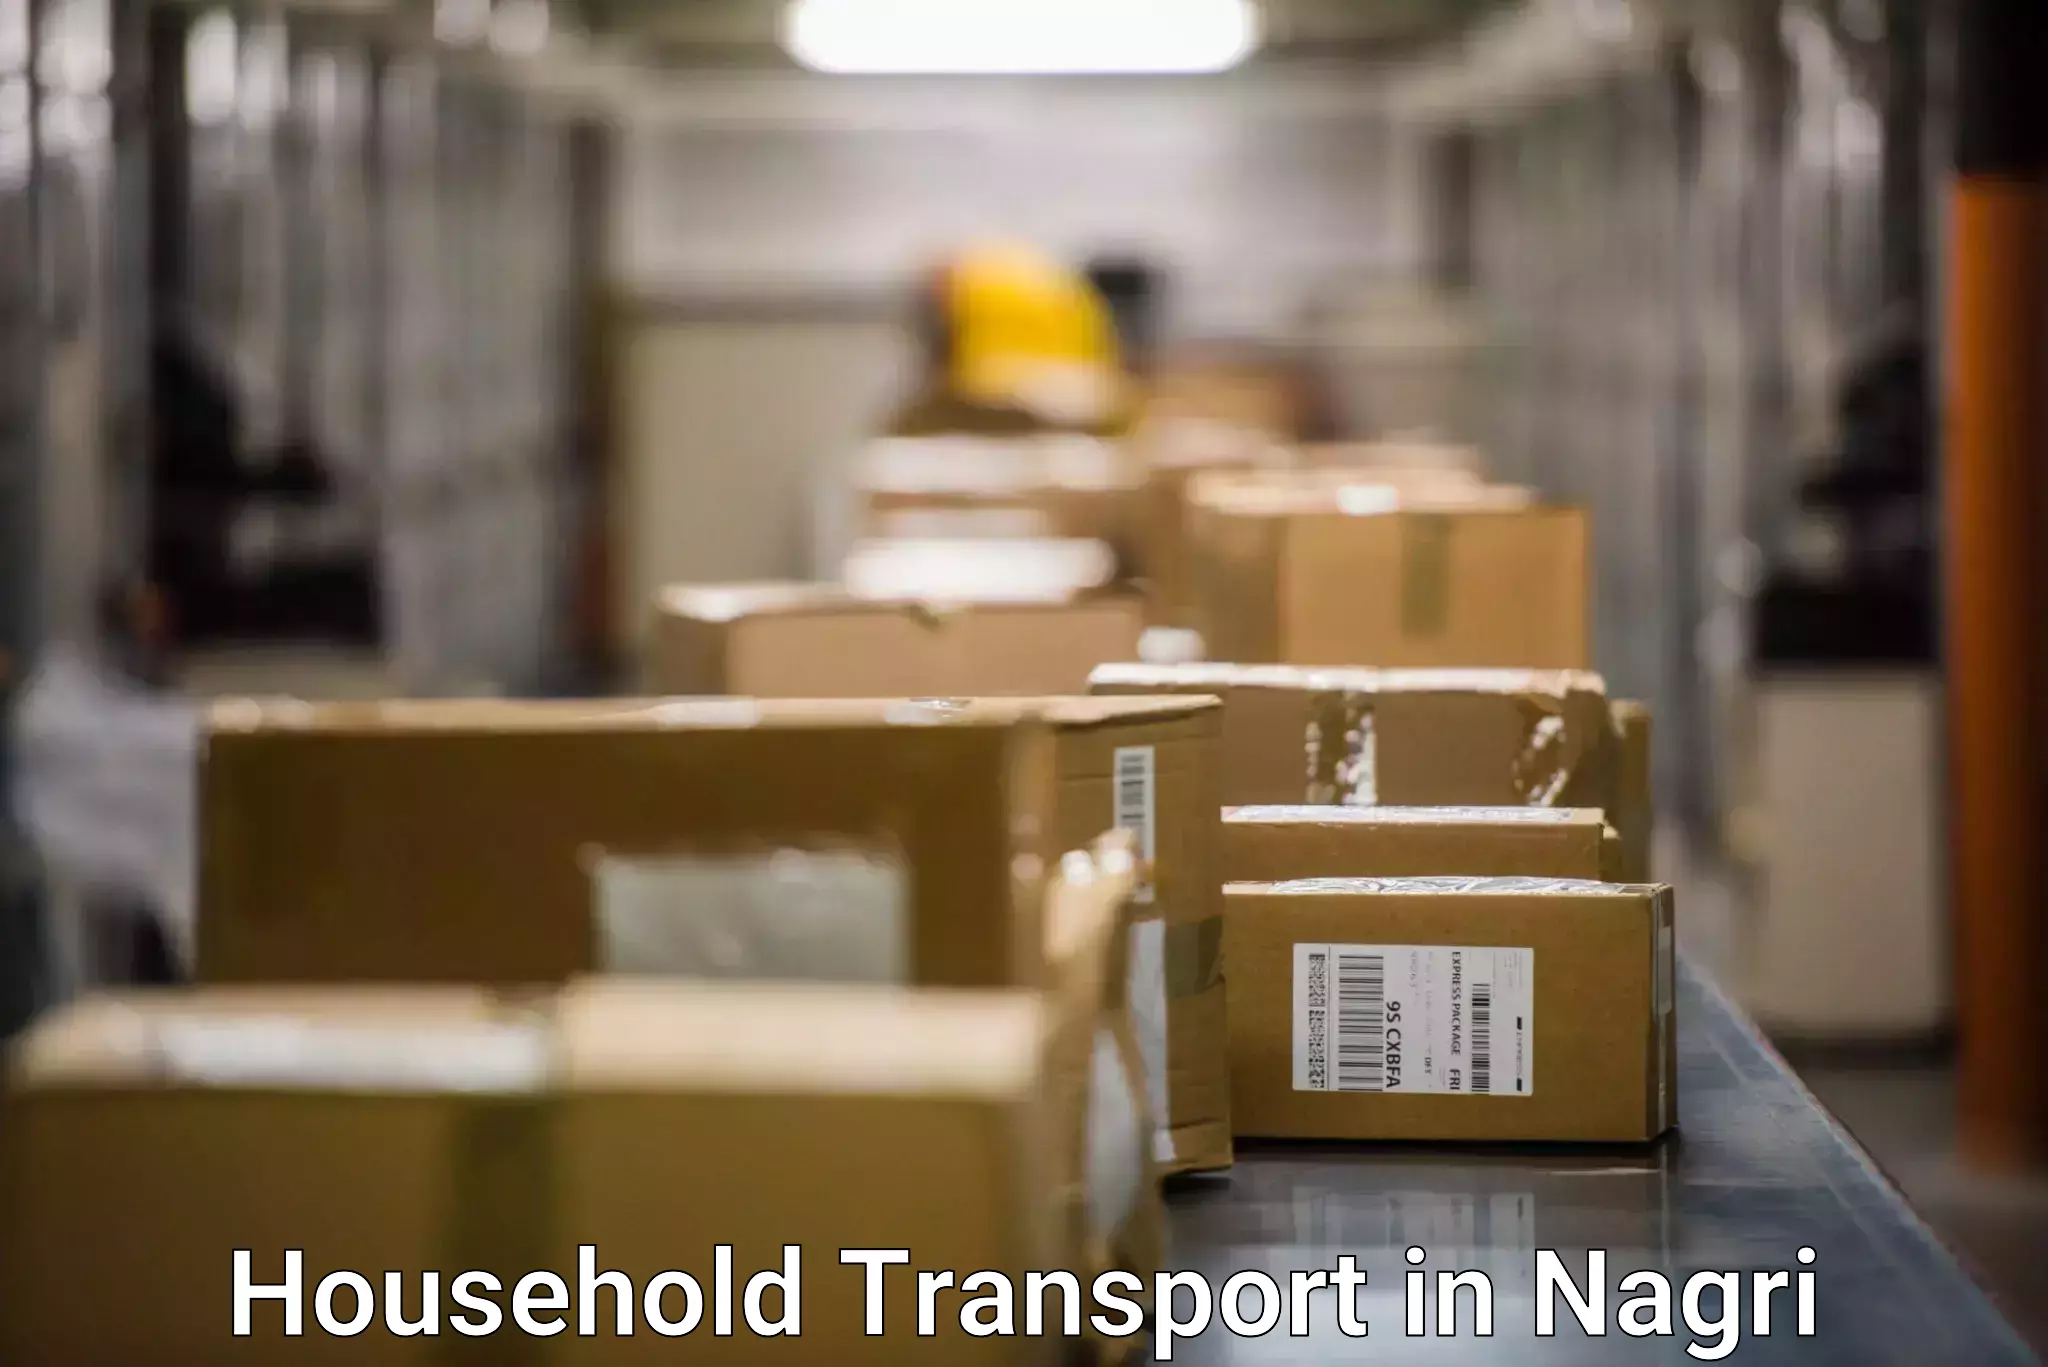 Quality household transport in Nagri